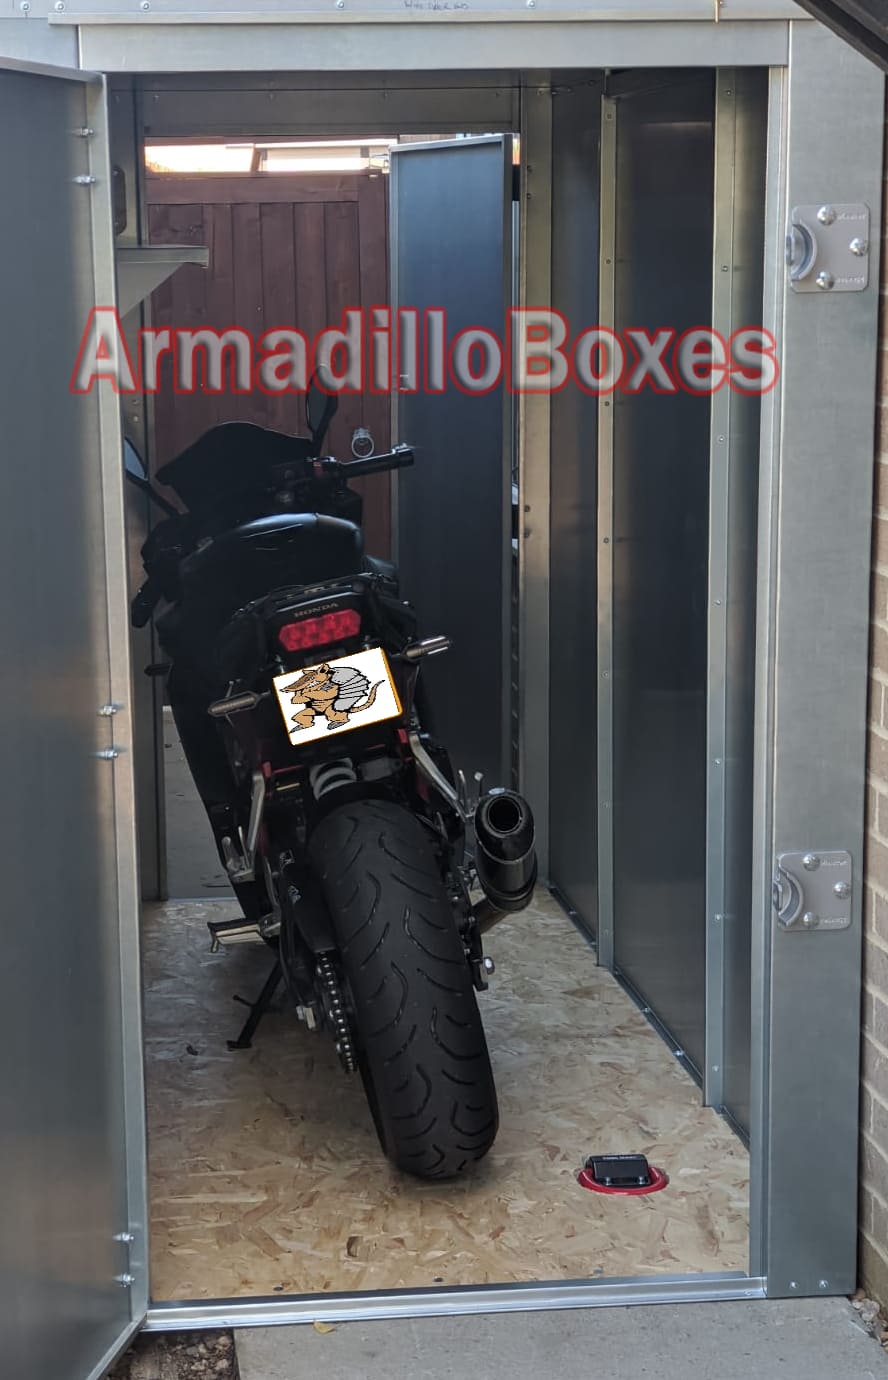 Honda Fireblade ArmadilloBoxes secure motorcycle shed